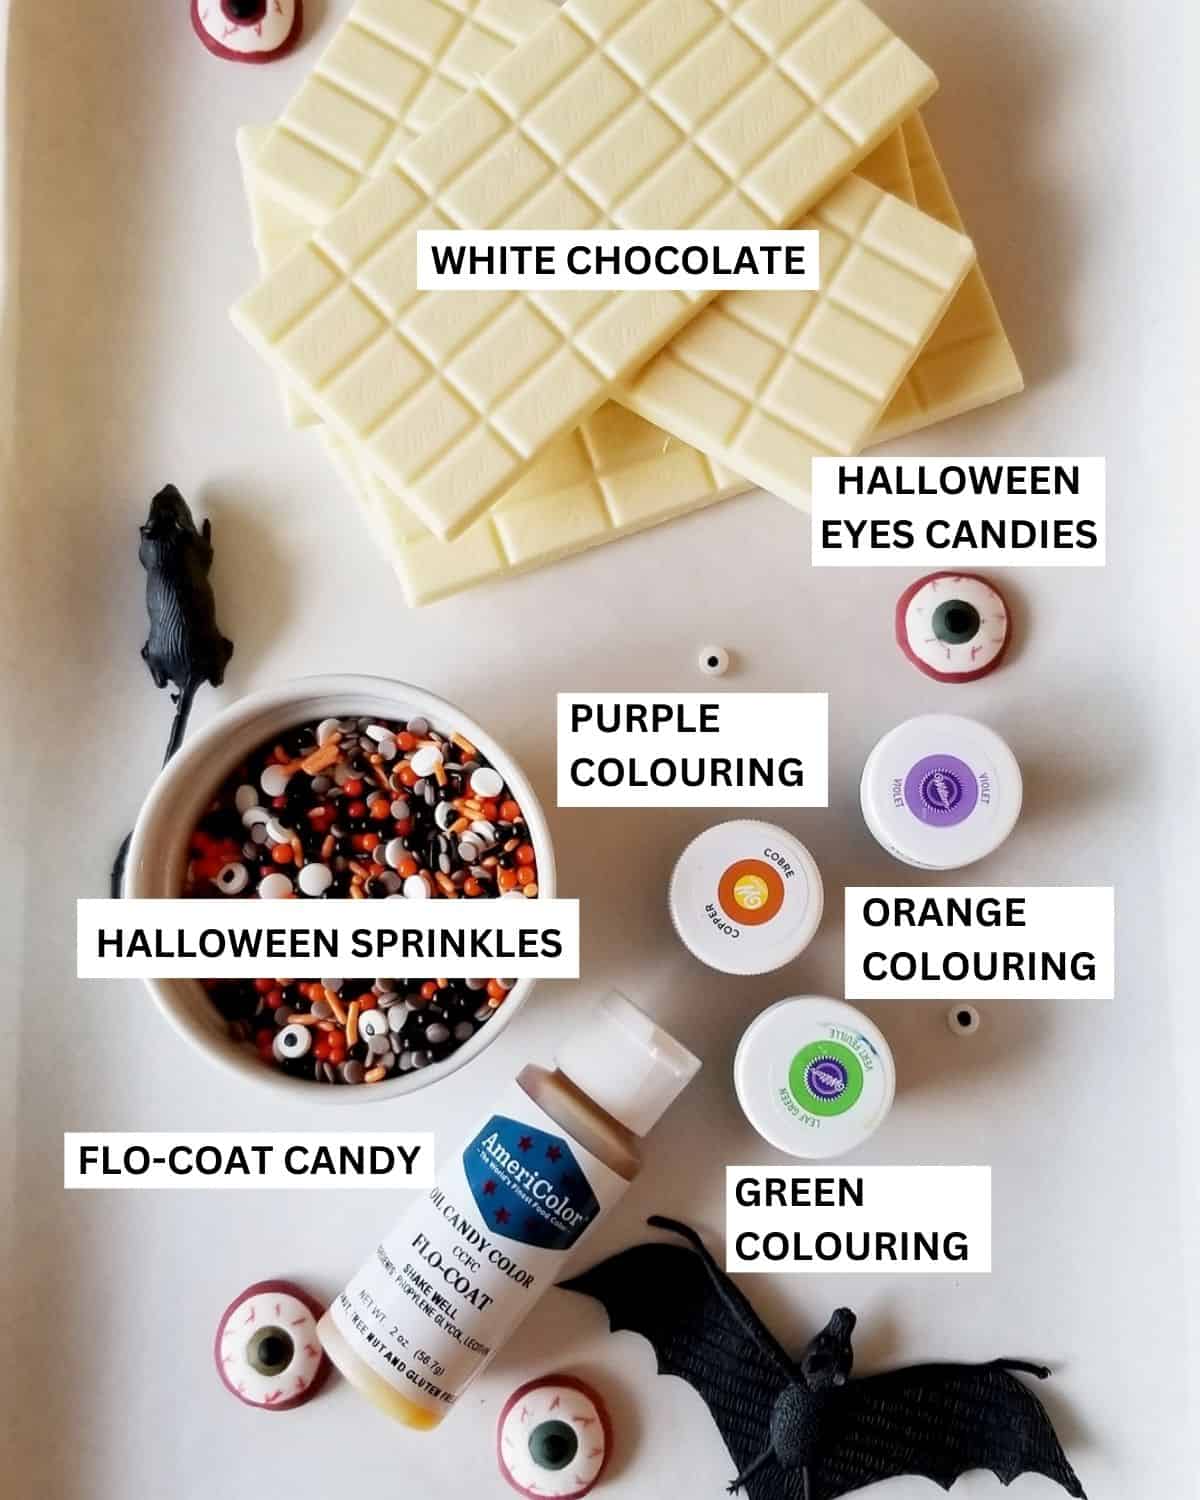 Ingredients of white chocolate bark